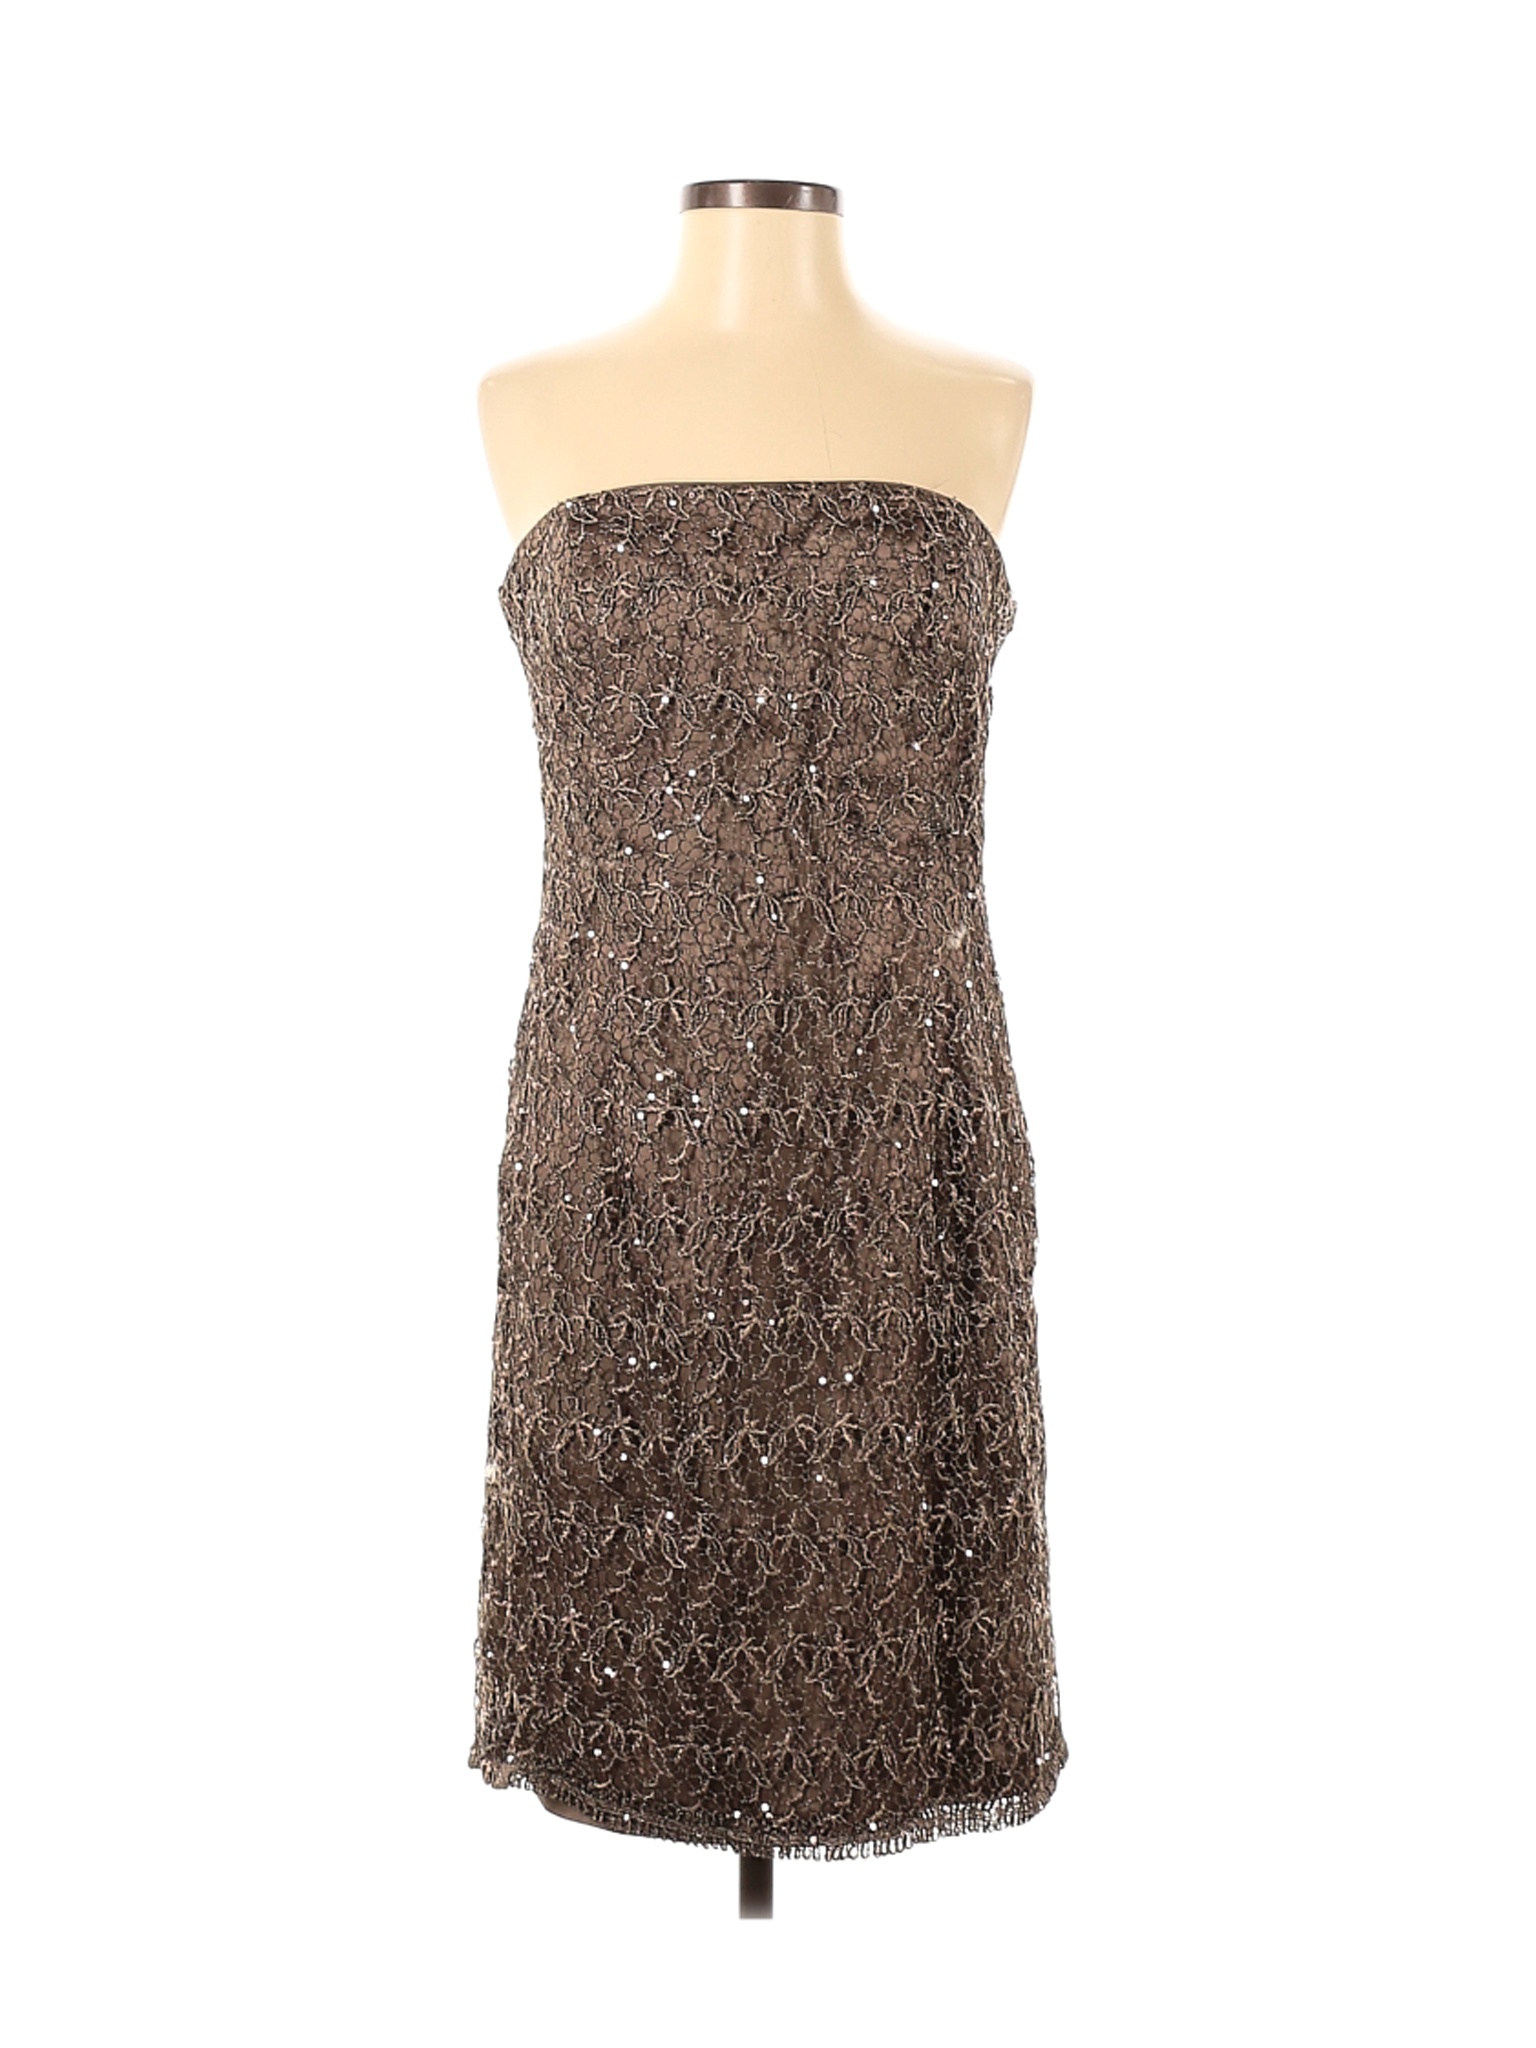 Adrianna Papell Women Brown Cocktail Dress 10 | eBay